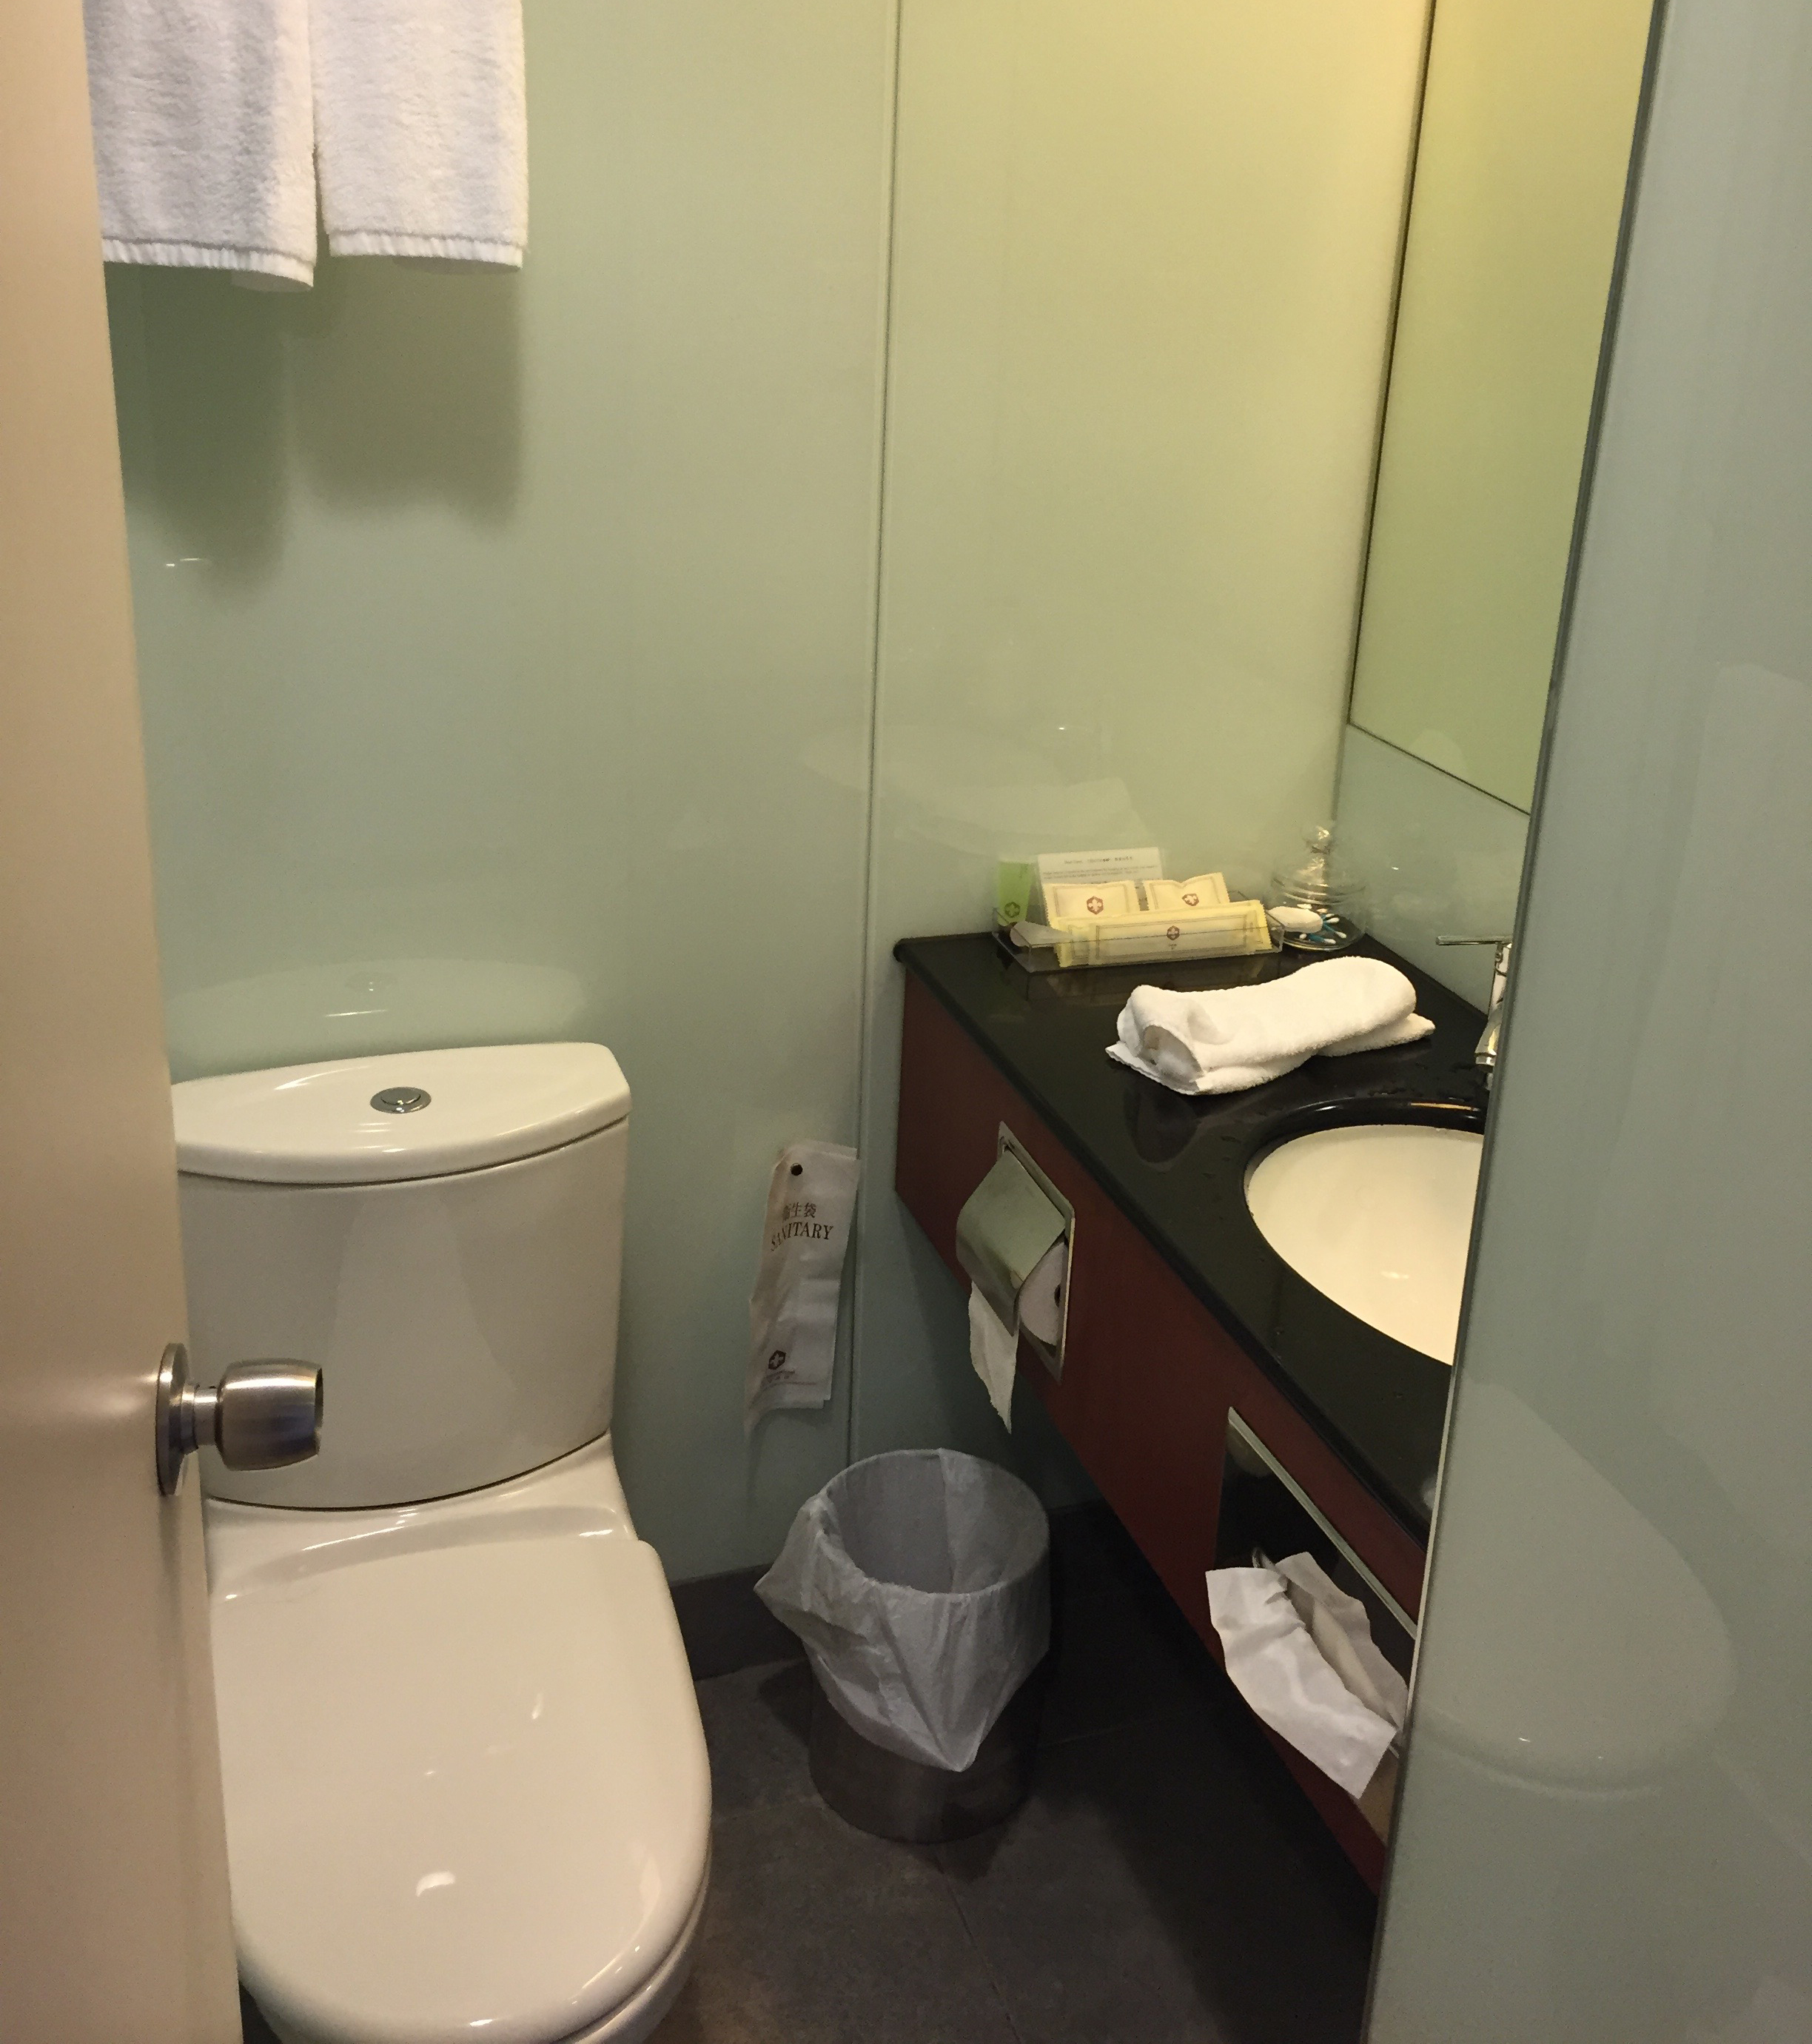 A clean bathroom with a few toiletries...